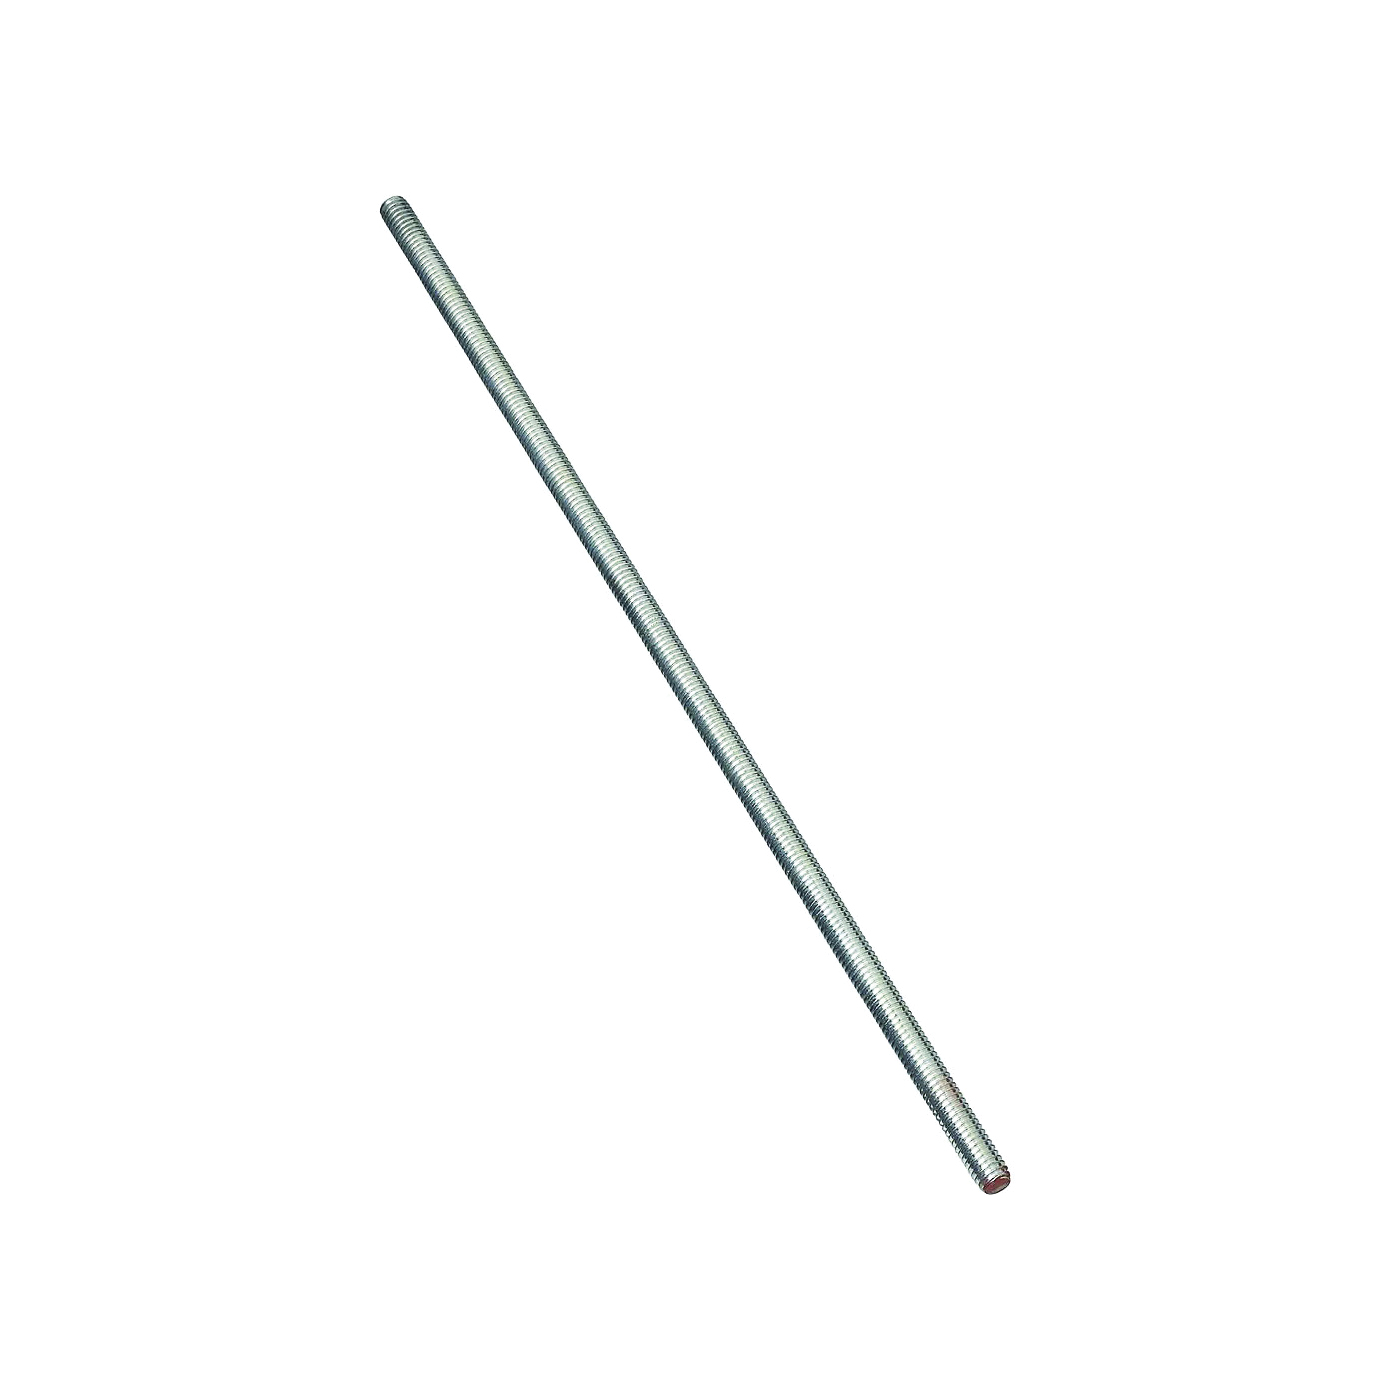 N179-598 Threaded Rod, 5/16-18 Thread, 72 in L, A Grade, Steel, Zinc, UNC Thread